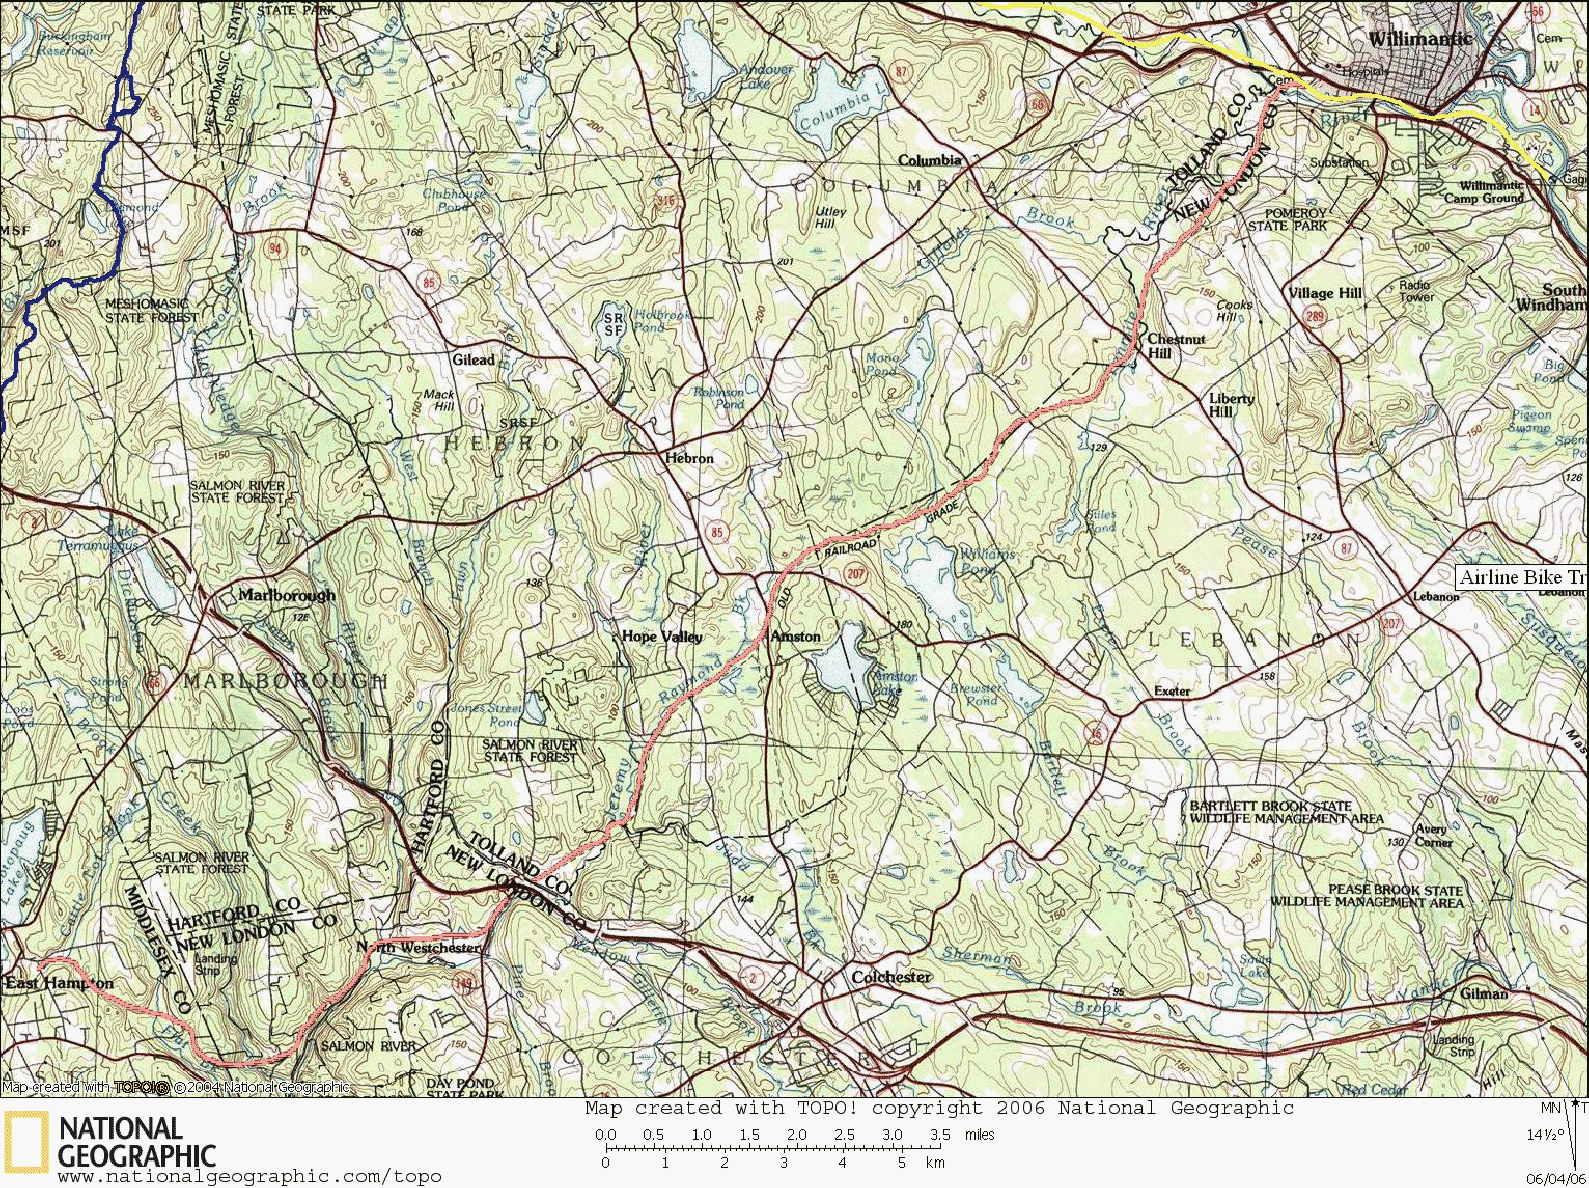 Airline Bike Trail, Map, Connecticut, Rails to Trails, East Hampton, Willimantic